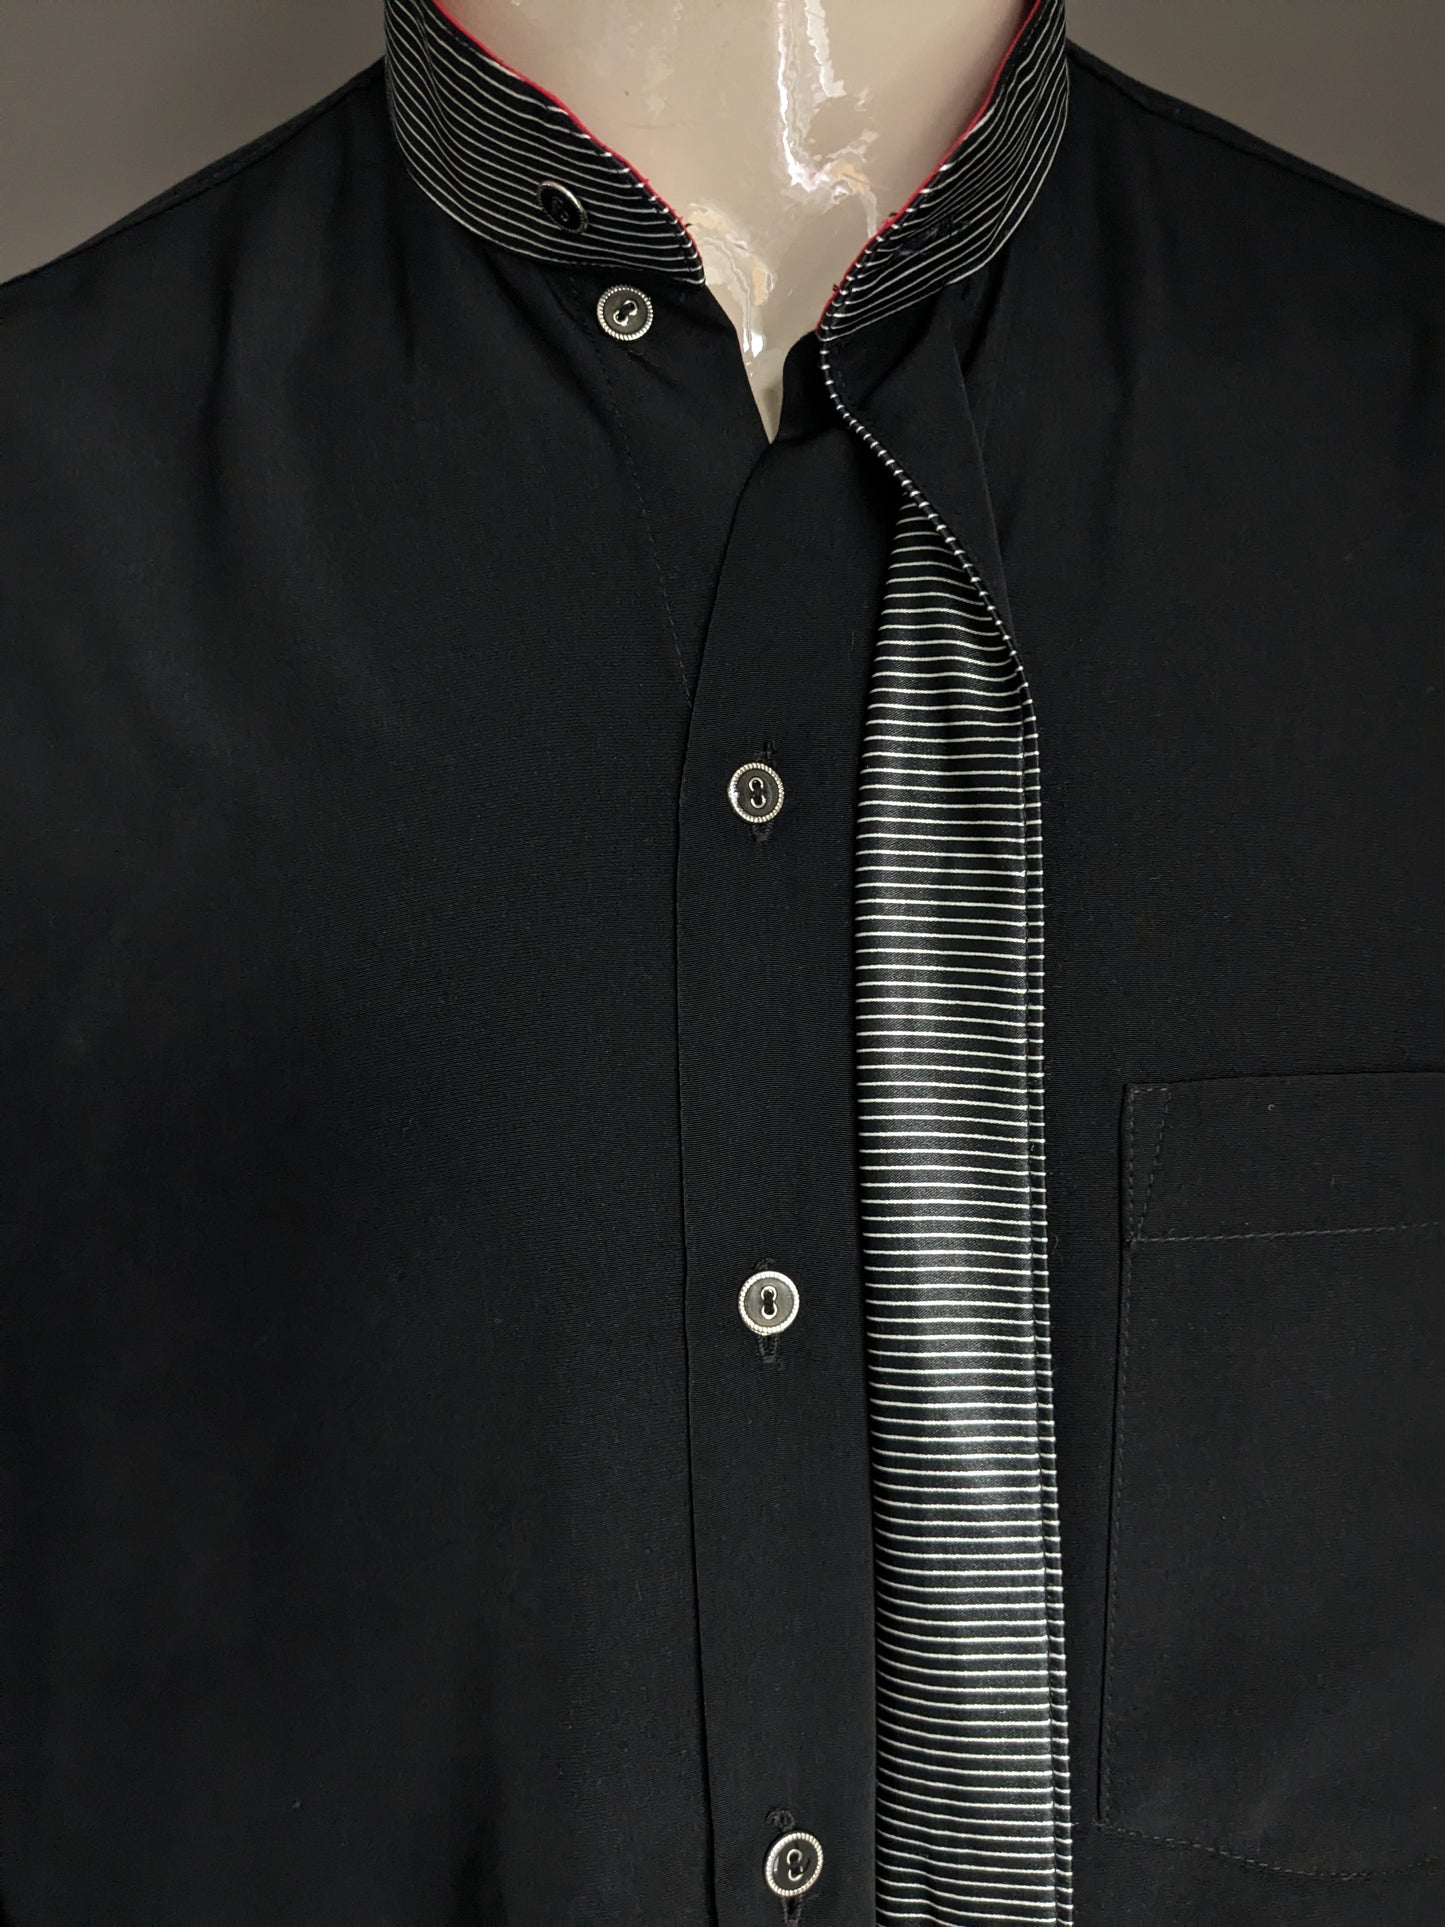 Vintage leche shirt upright / farmers / mao collar. Black. Size XL.